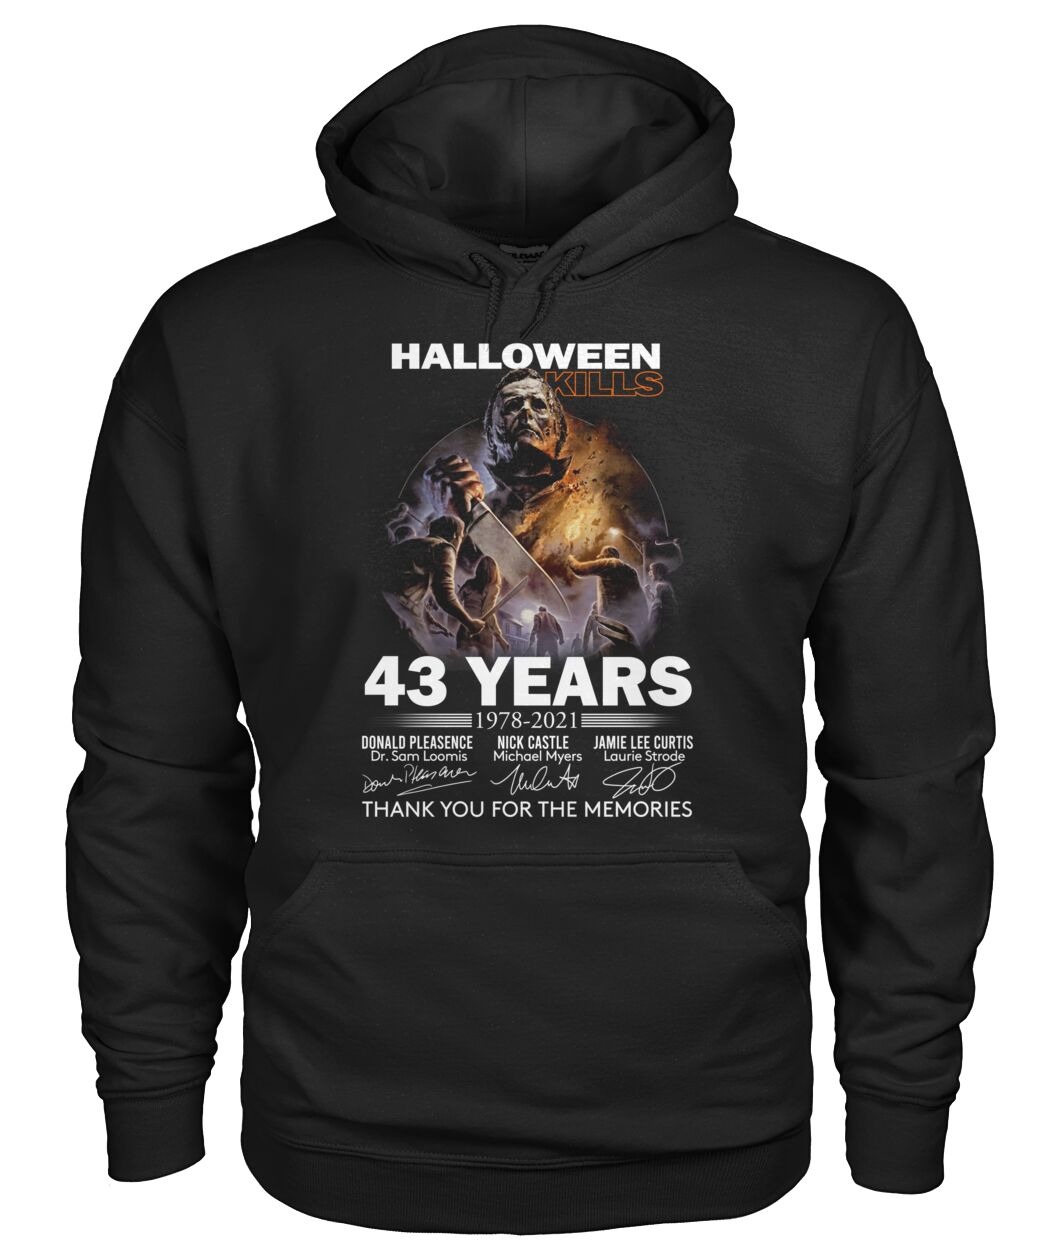 Michael Myers Halloween kills 43 years thank you for the memories shirt hoodie 3